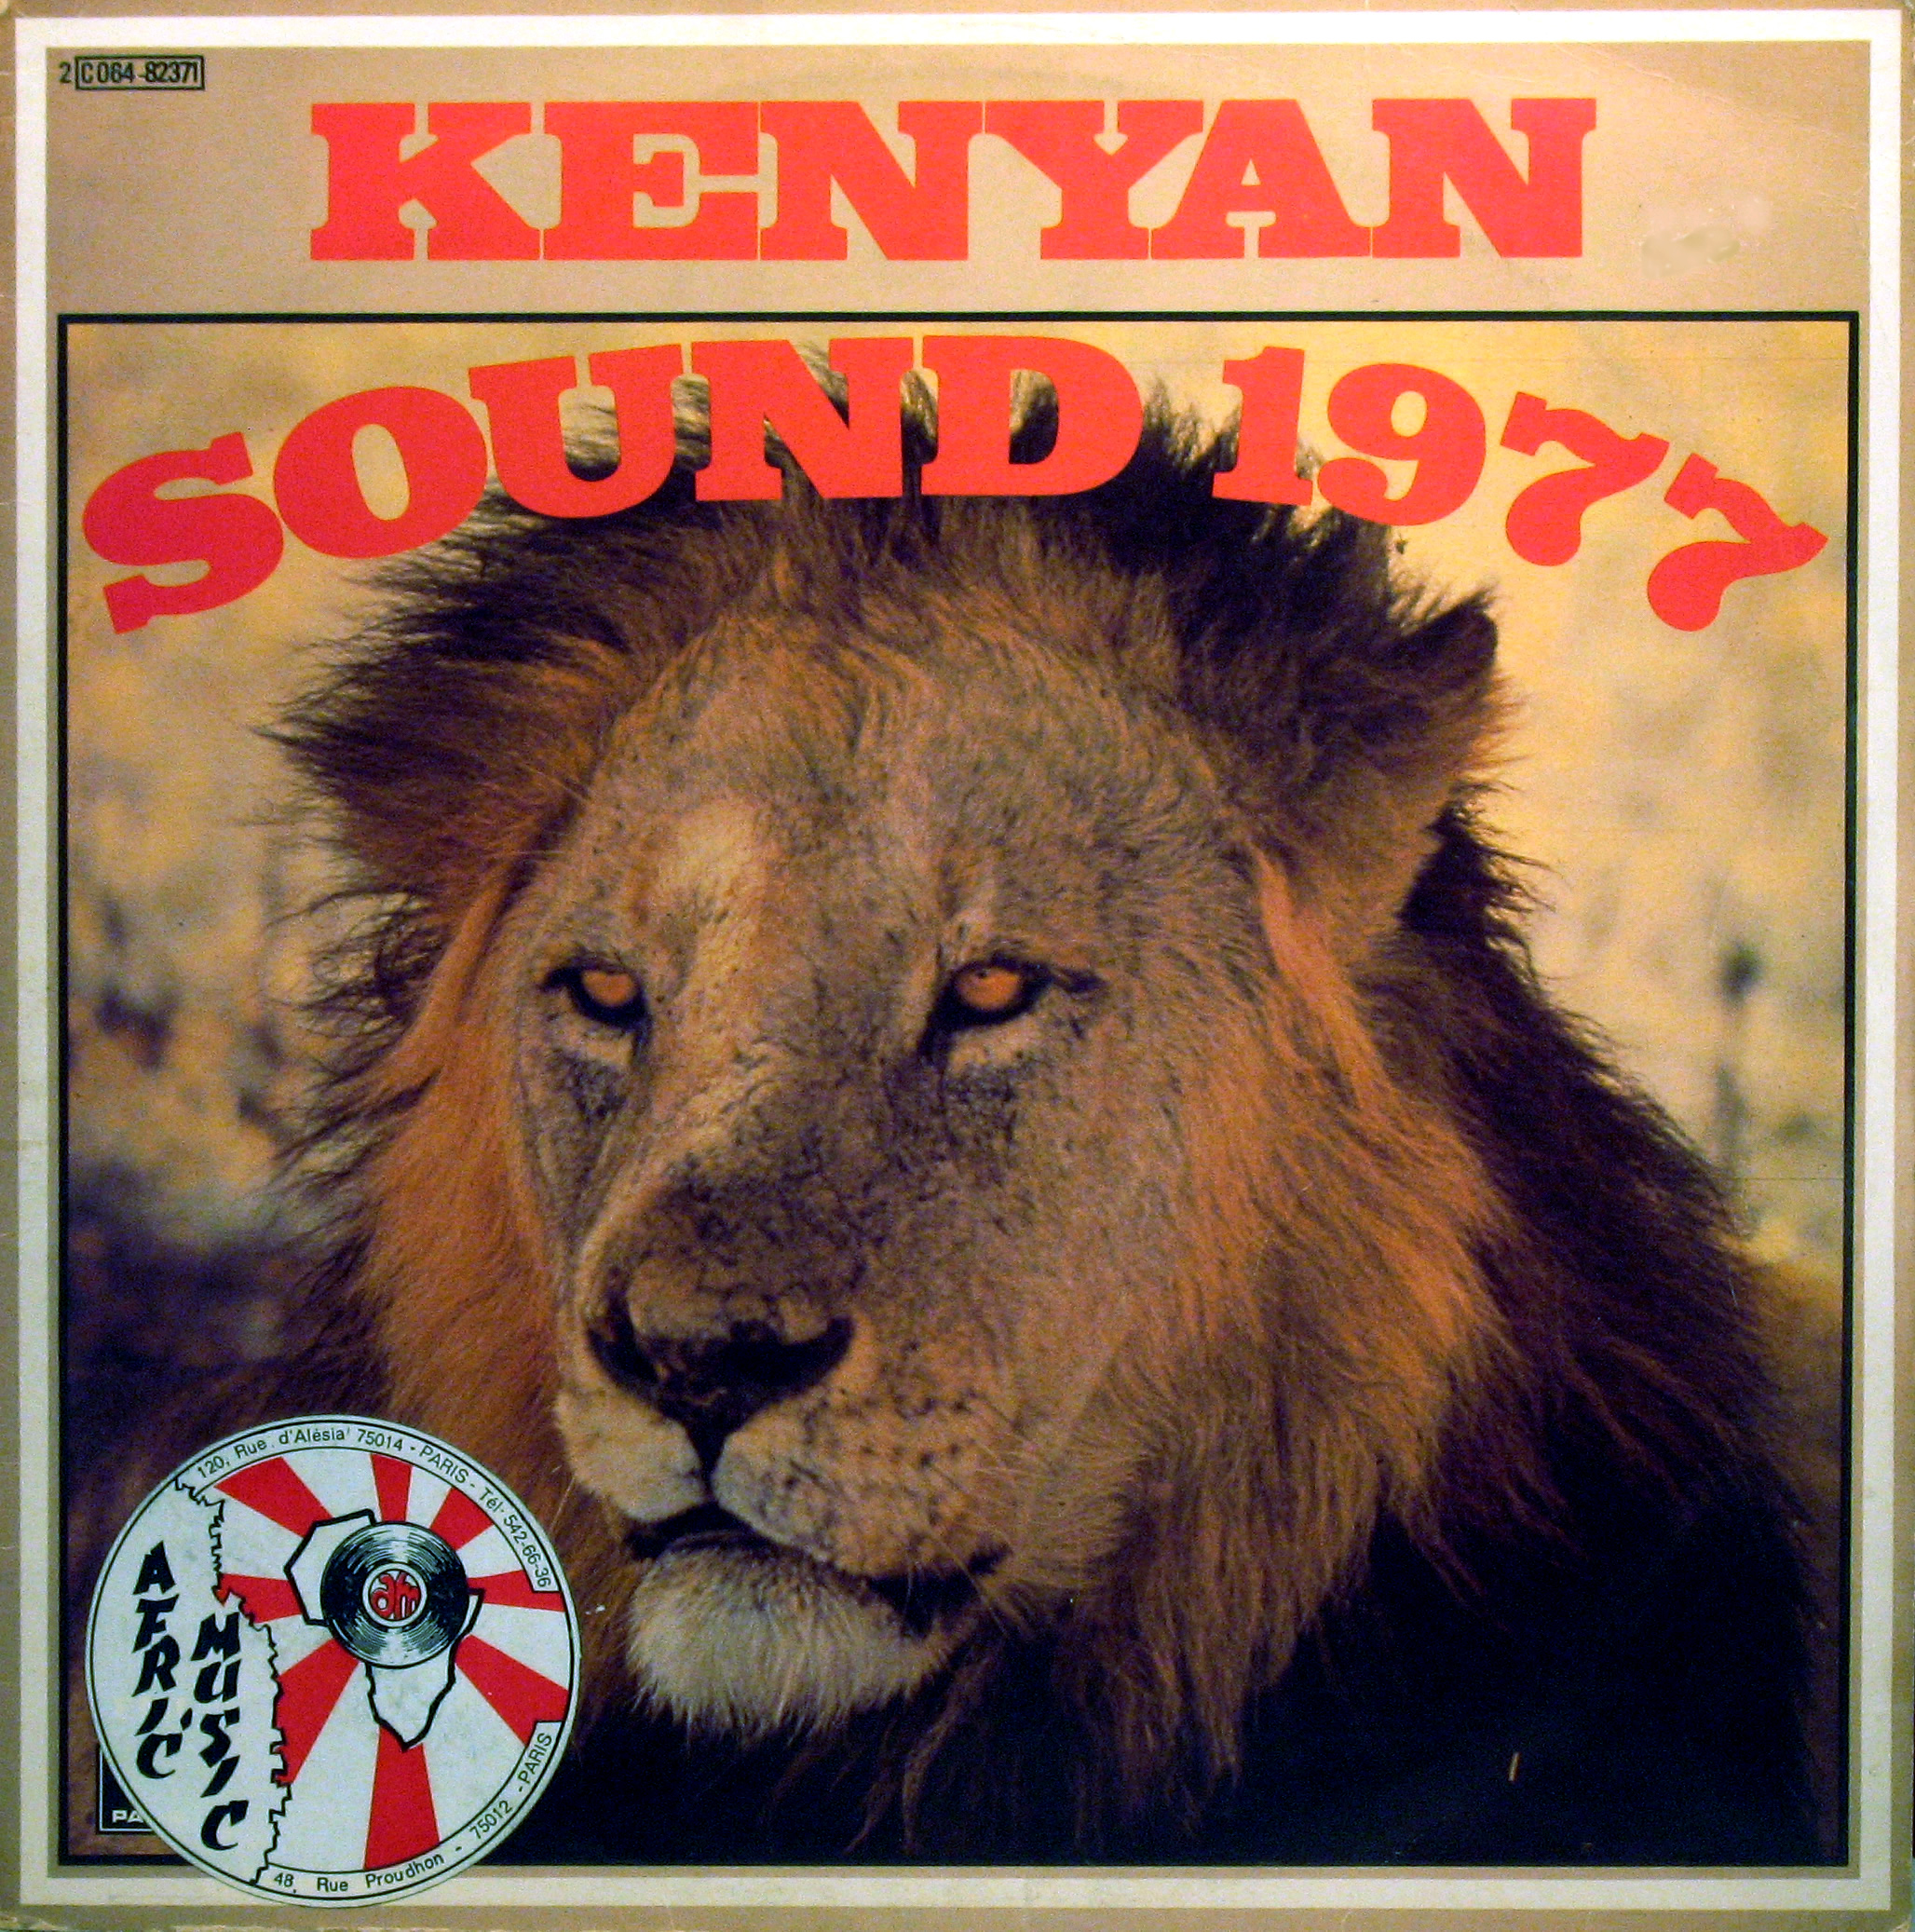 Kenyan Sound 1977 – Various Artists,Pathé Marconi / EMI 1977 Kenyan-Sound-77-front